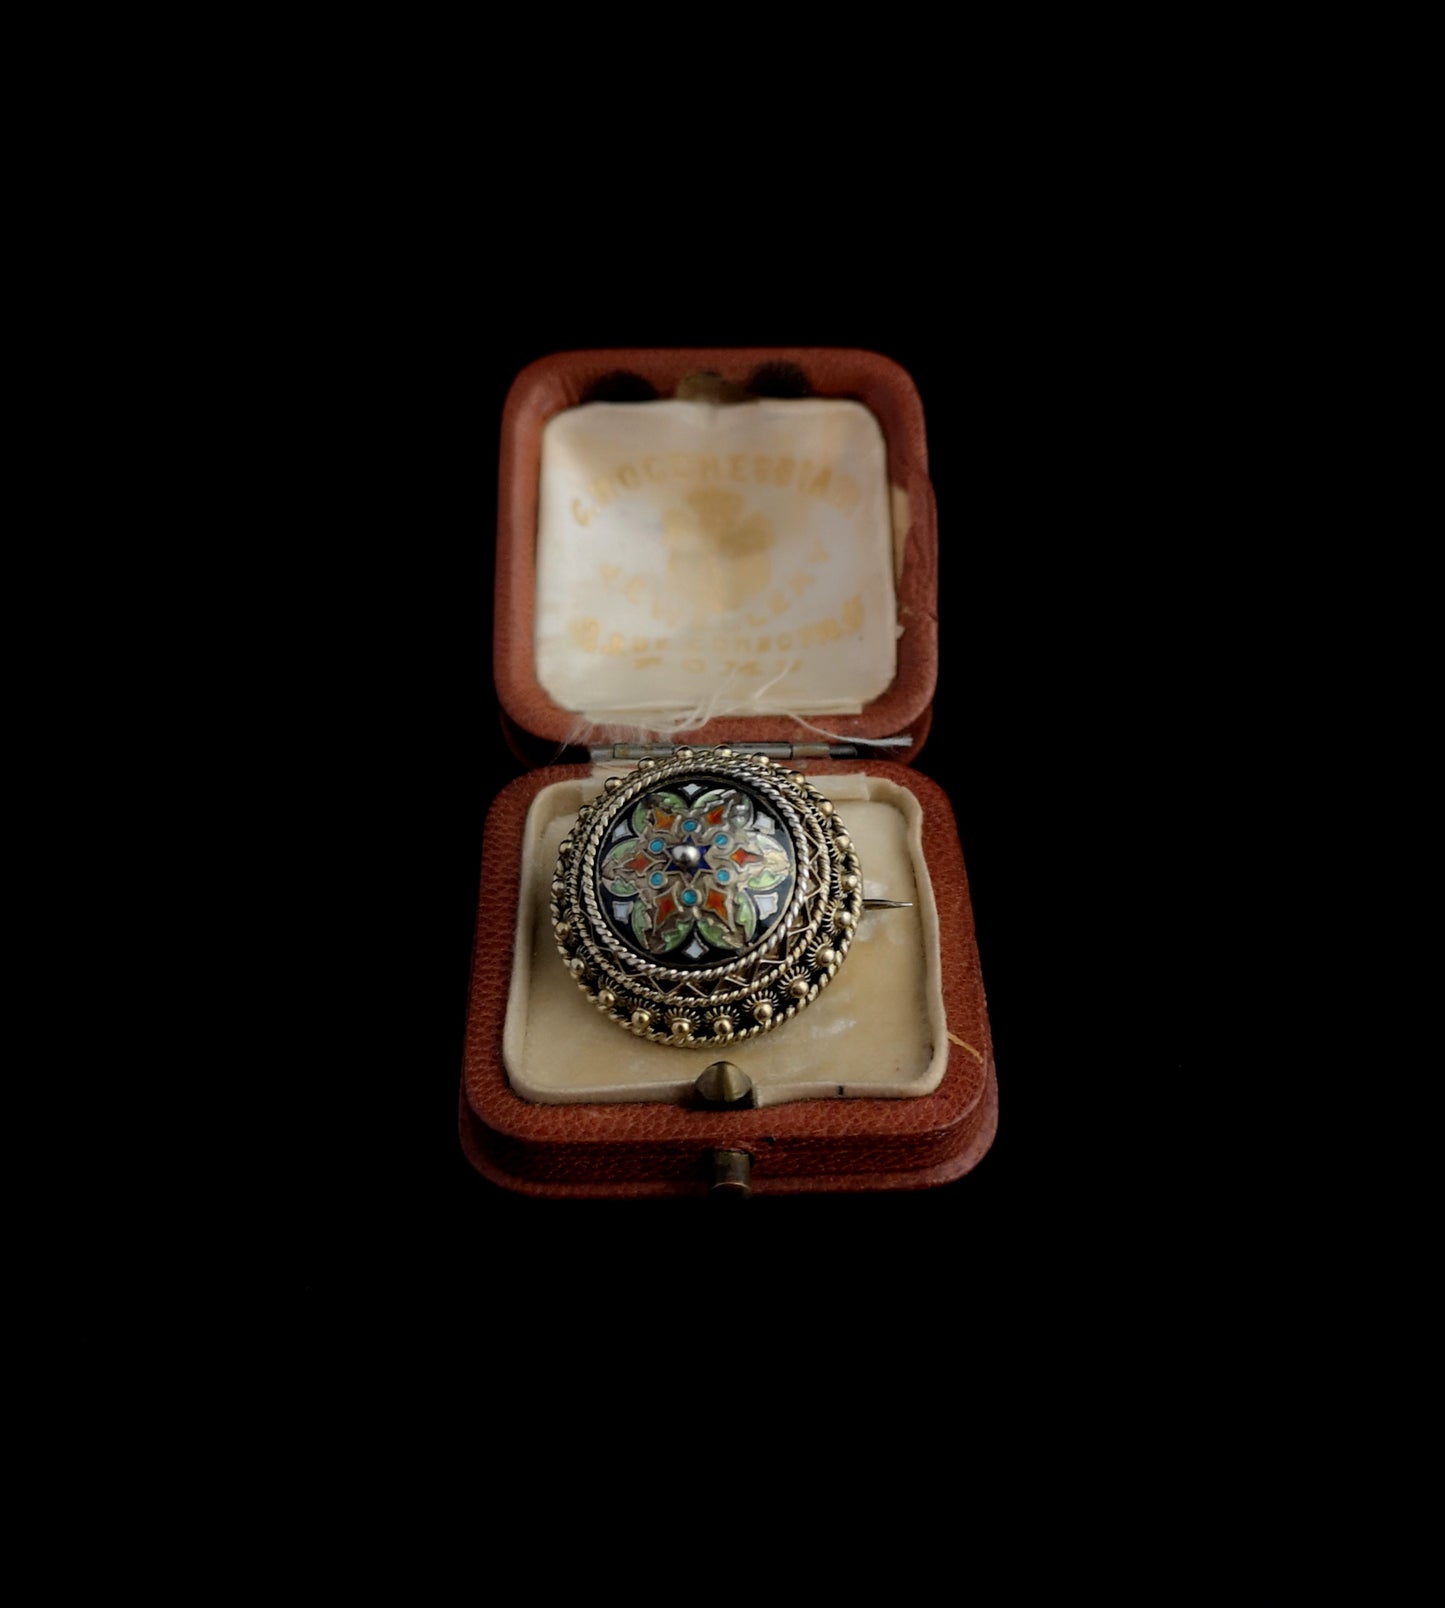 Antique Champleve enamel brooch, silver gilt